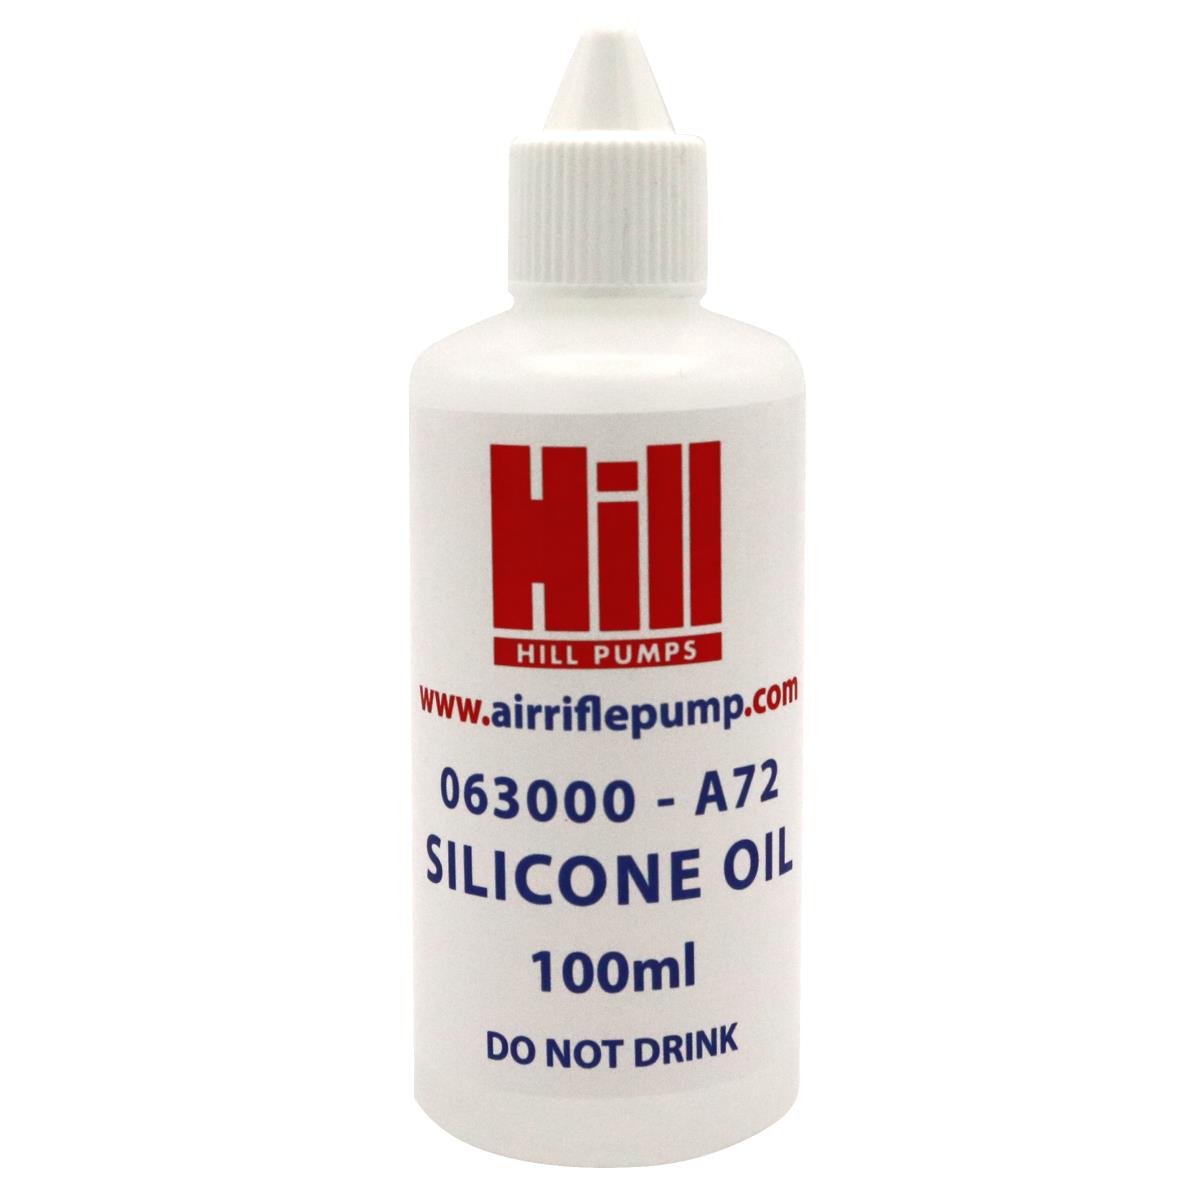 Silicone Oil (Silikonöl) 100ml Flasche